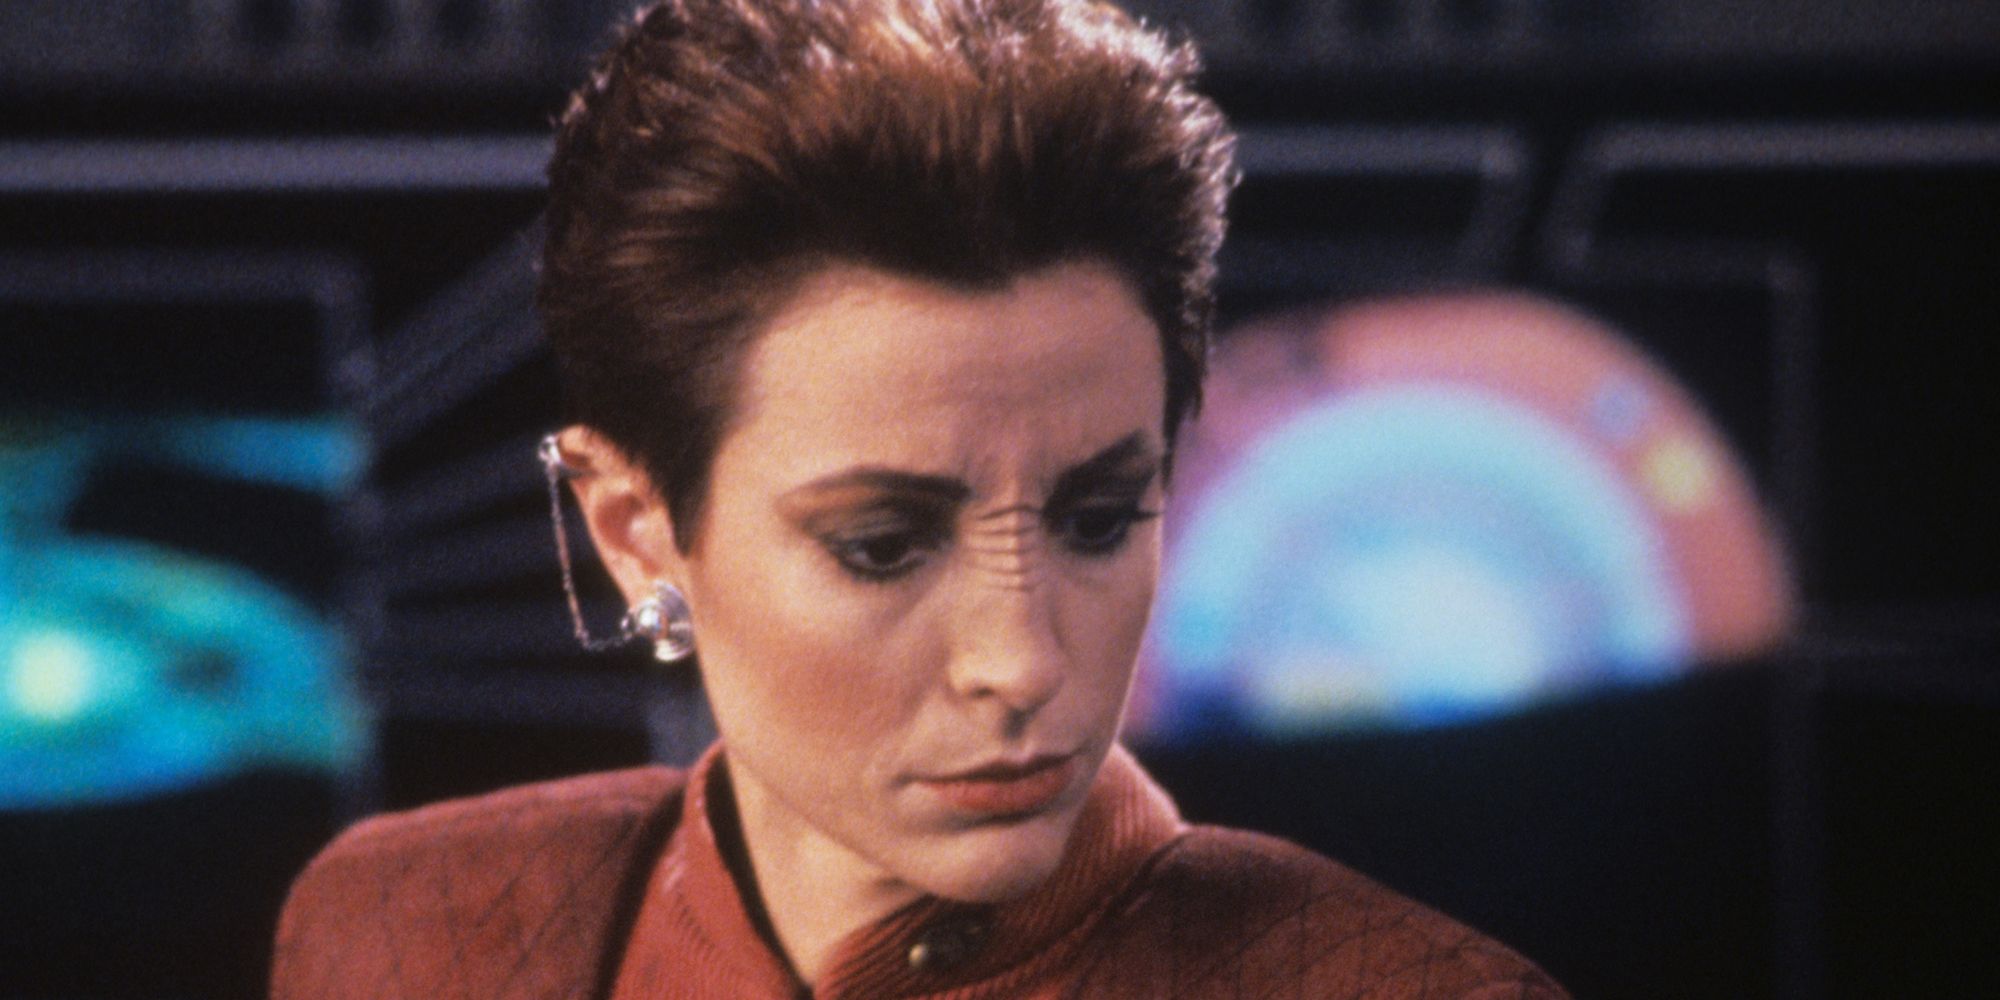 Nana Visitor as Kira Nerys in Star Trek Deep Space 9